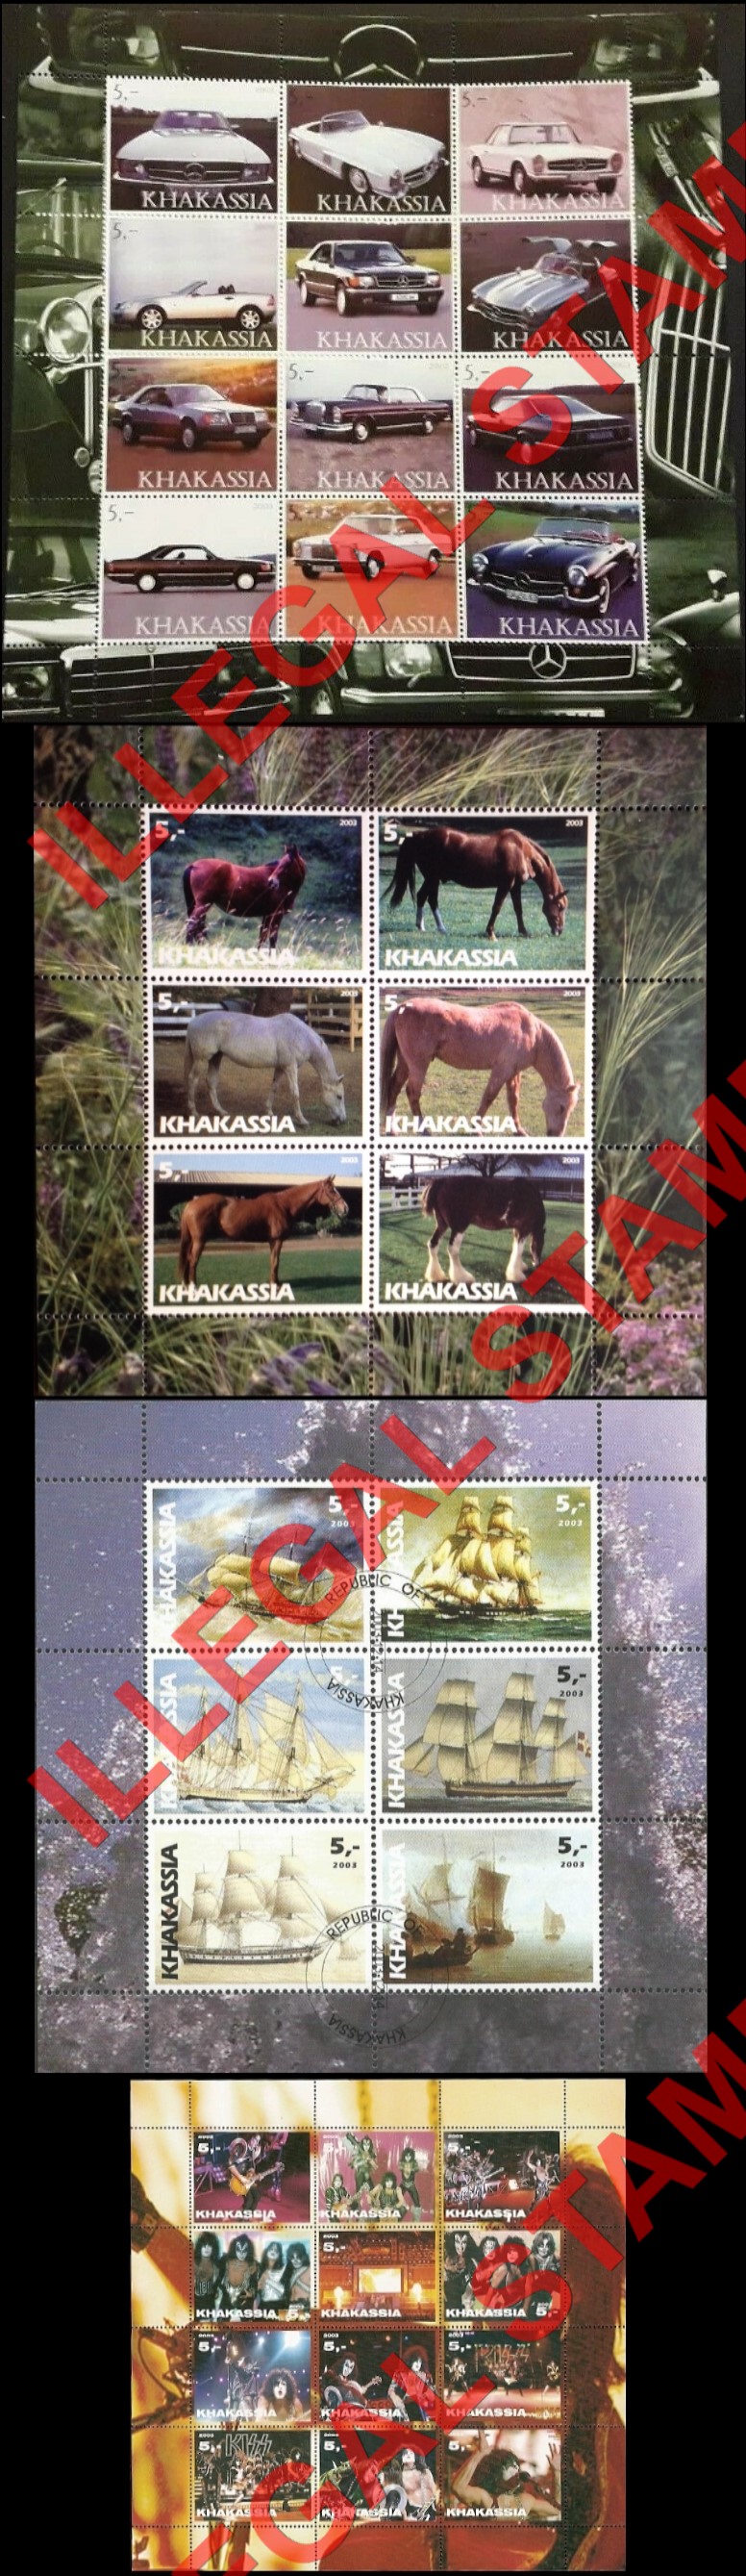 Republic of Khakasia 2003 Illegal Stamps (Part 2)